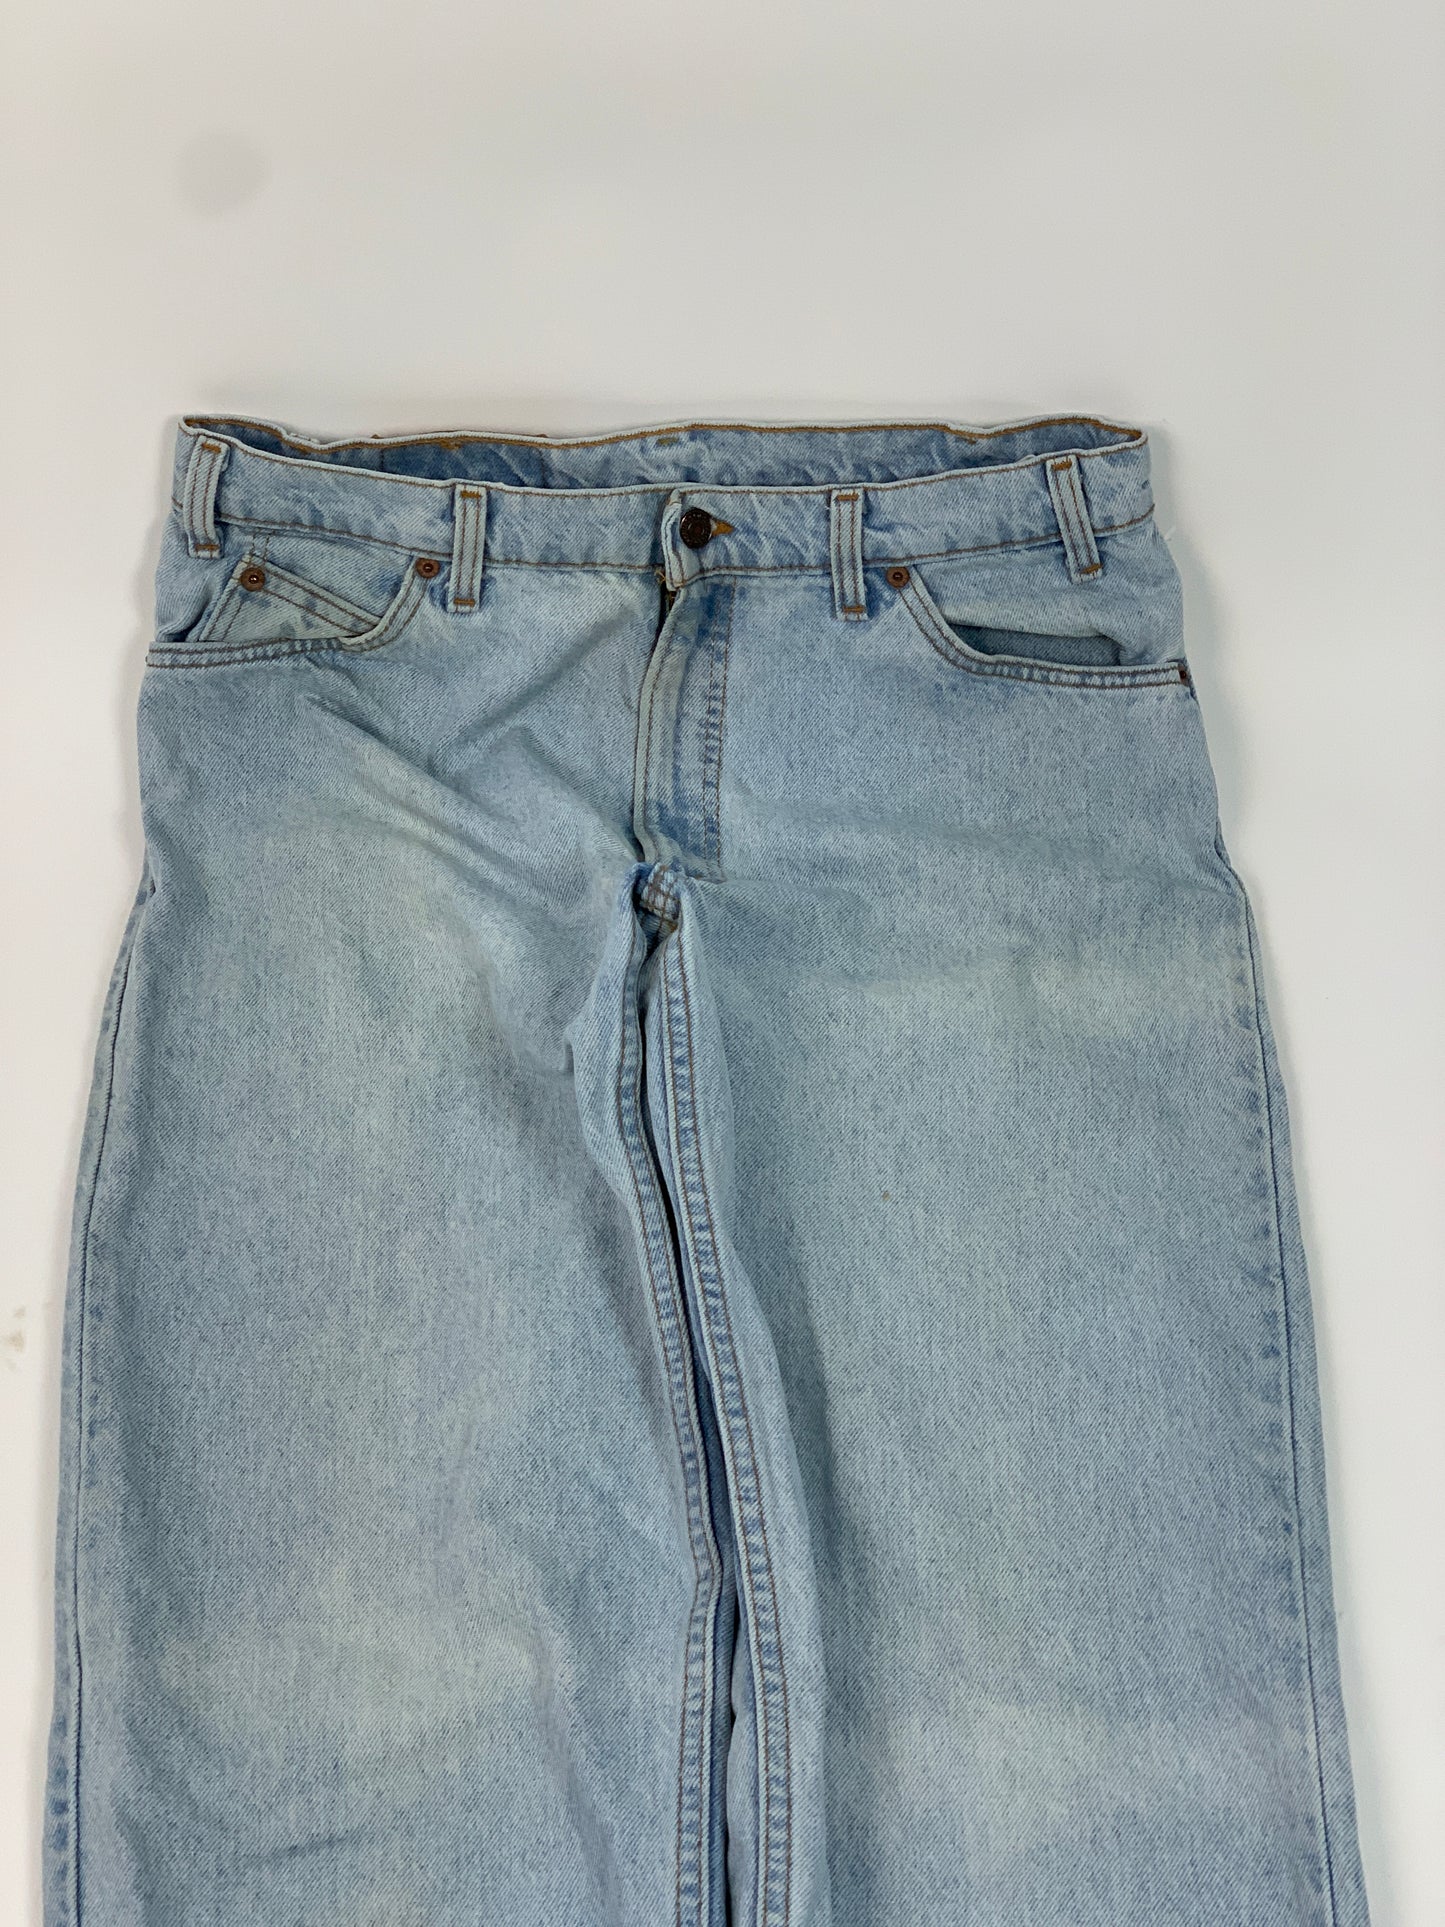 Levis Orange Tab Vintage Wash Jeans - 34